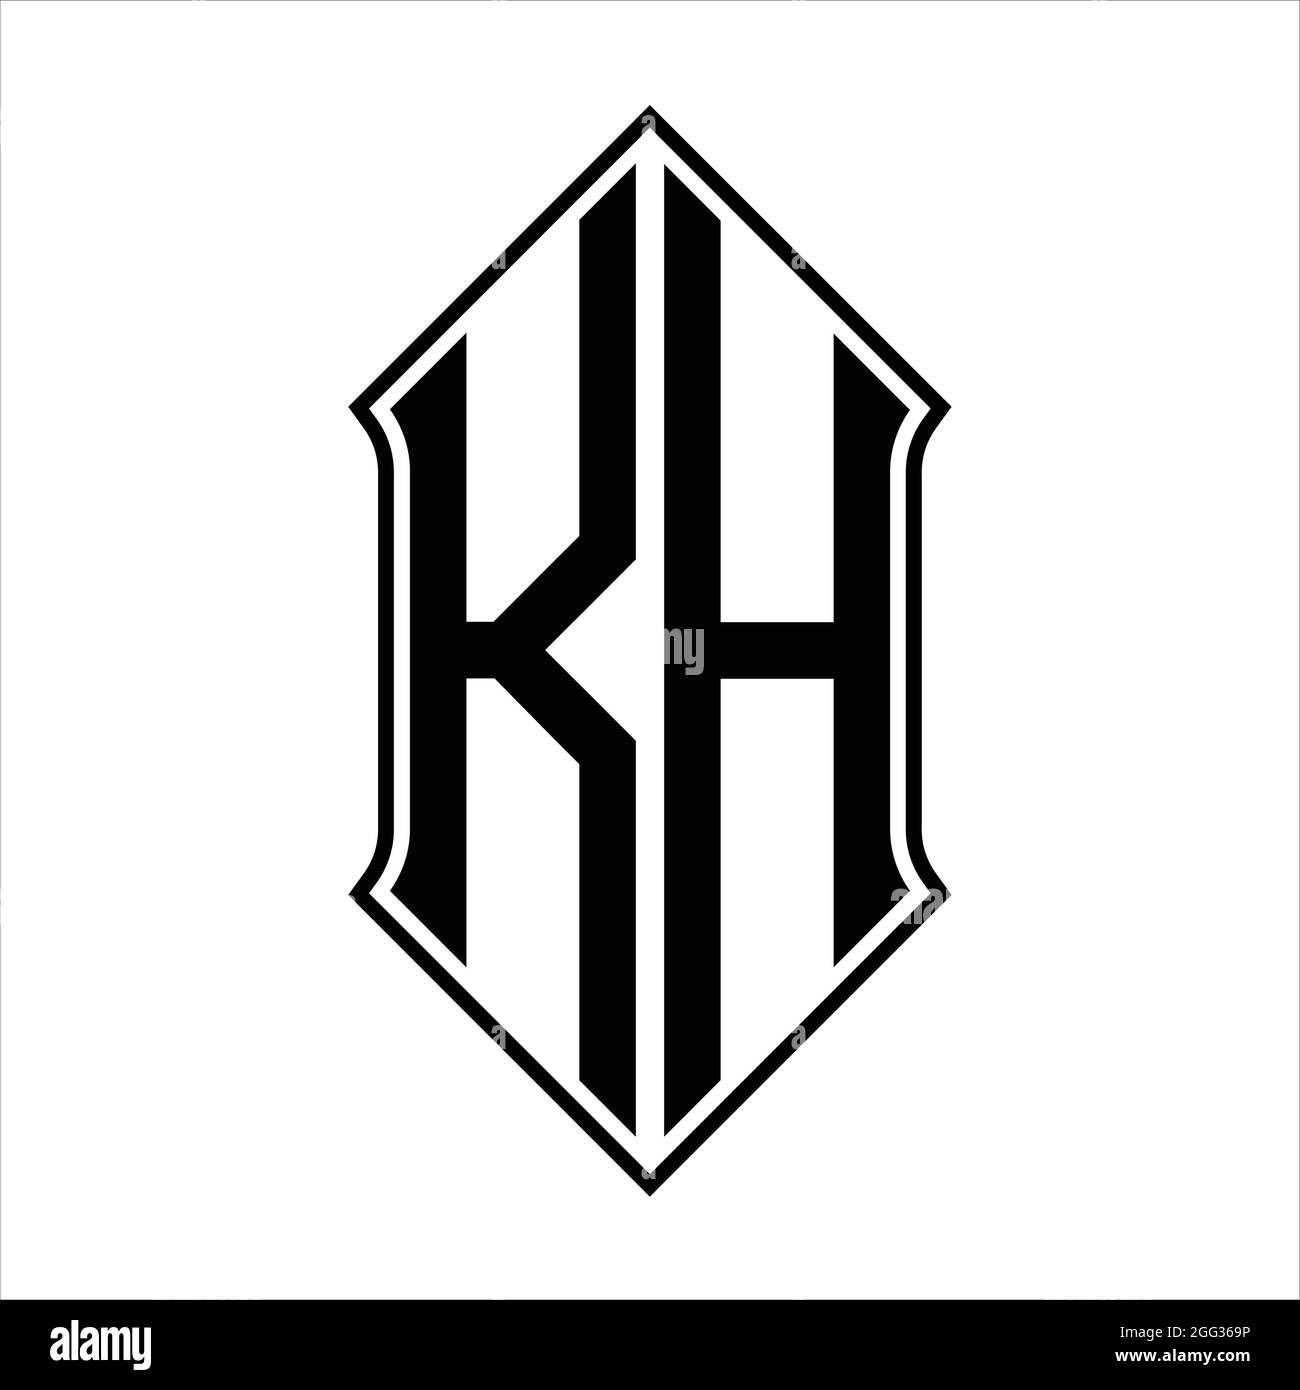 KH Logo monogram with shieldshape and black outline design template ...